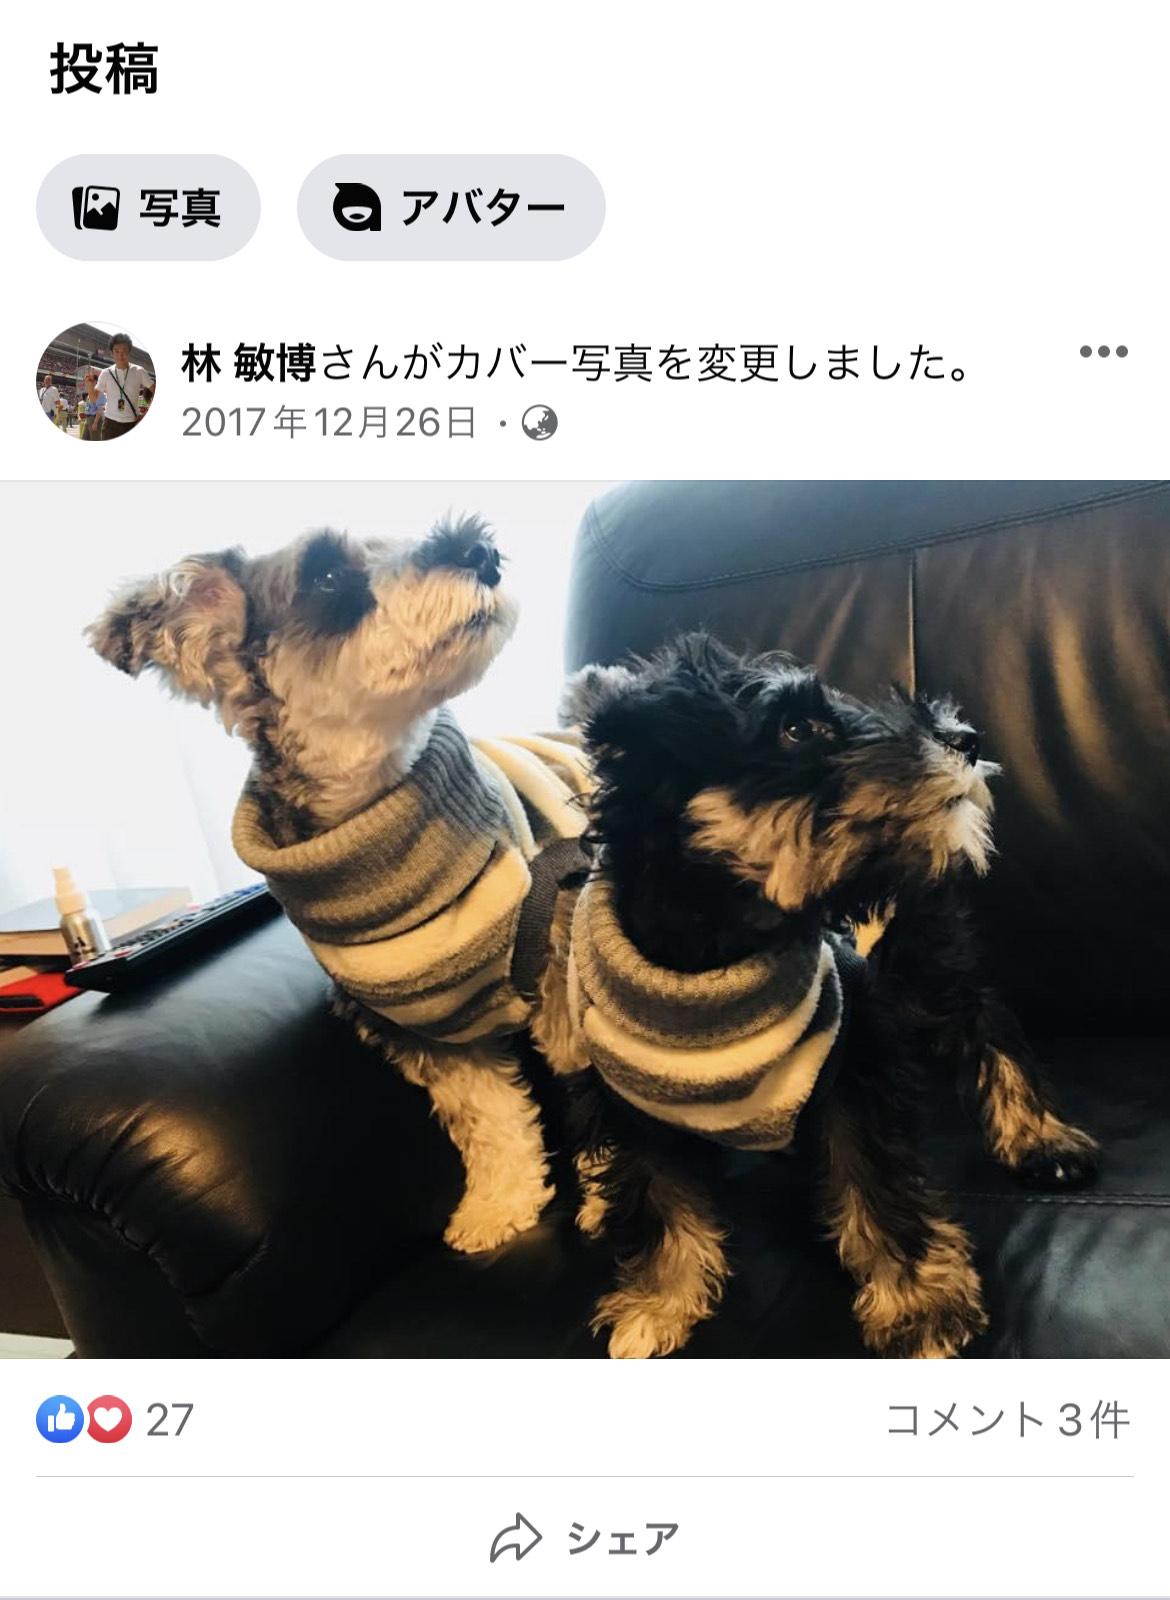 hayashi-toshihiro dog